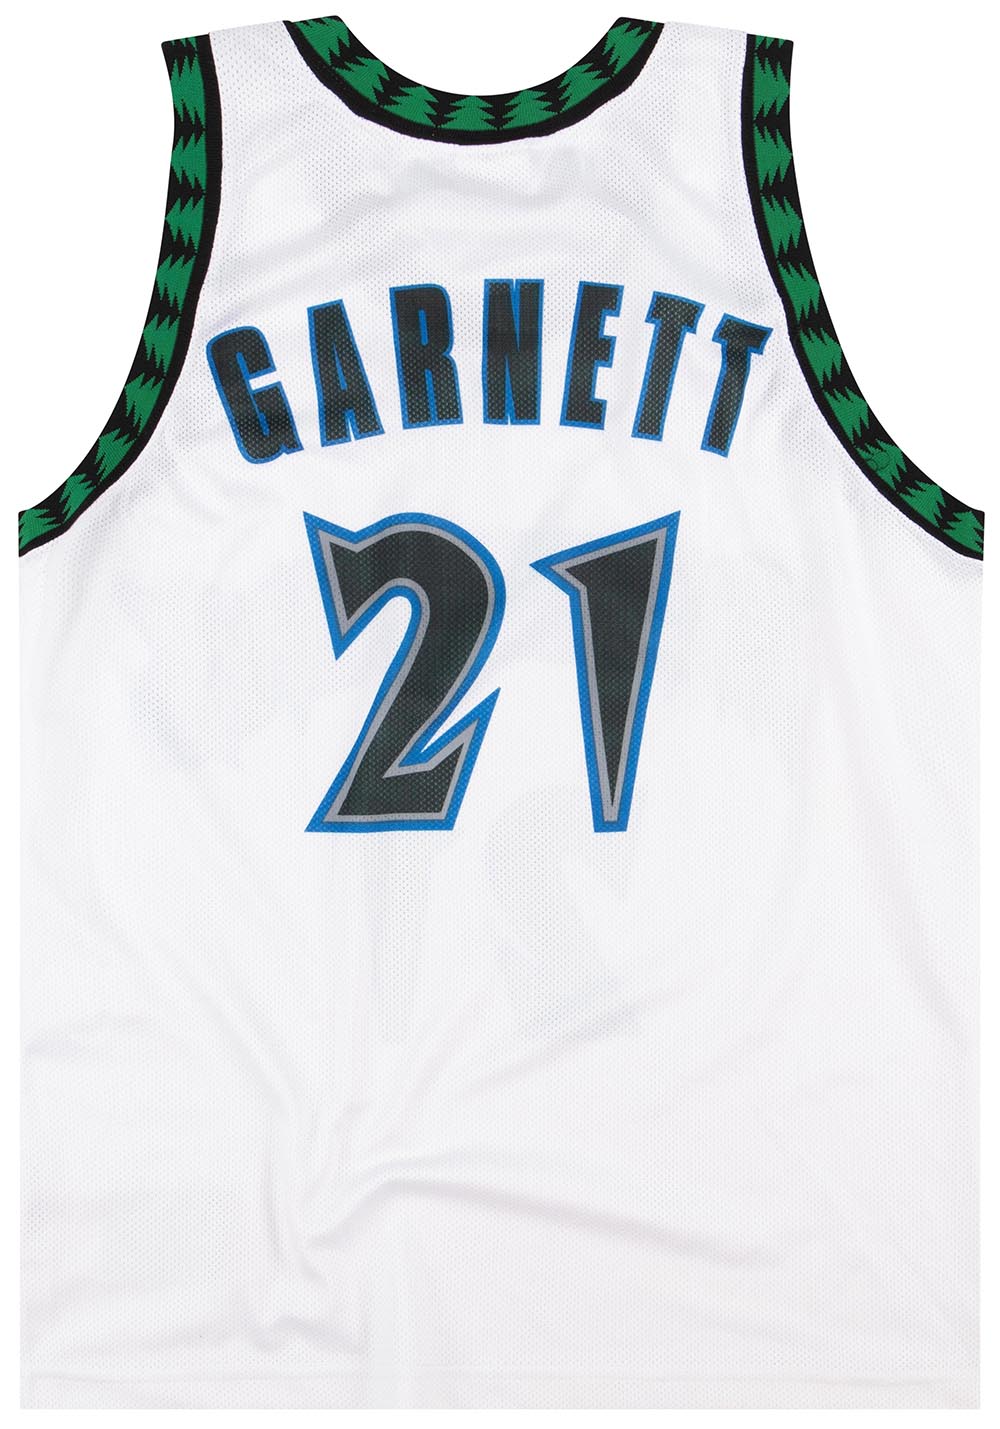 xlrepublikan Vintage Boston Celtics #Garnett NBA Jersey Small Size